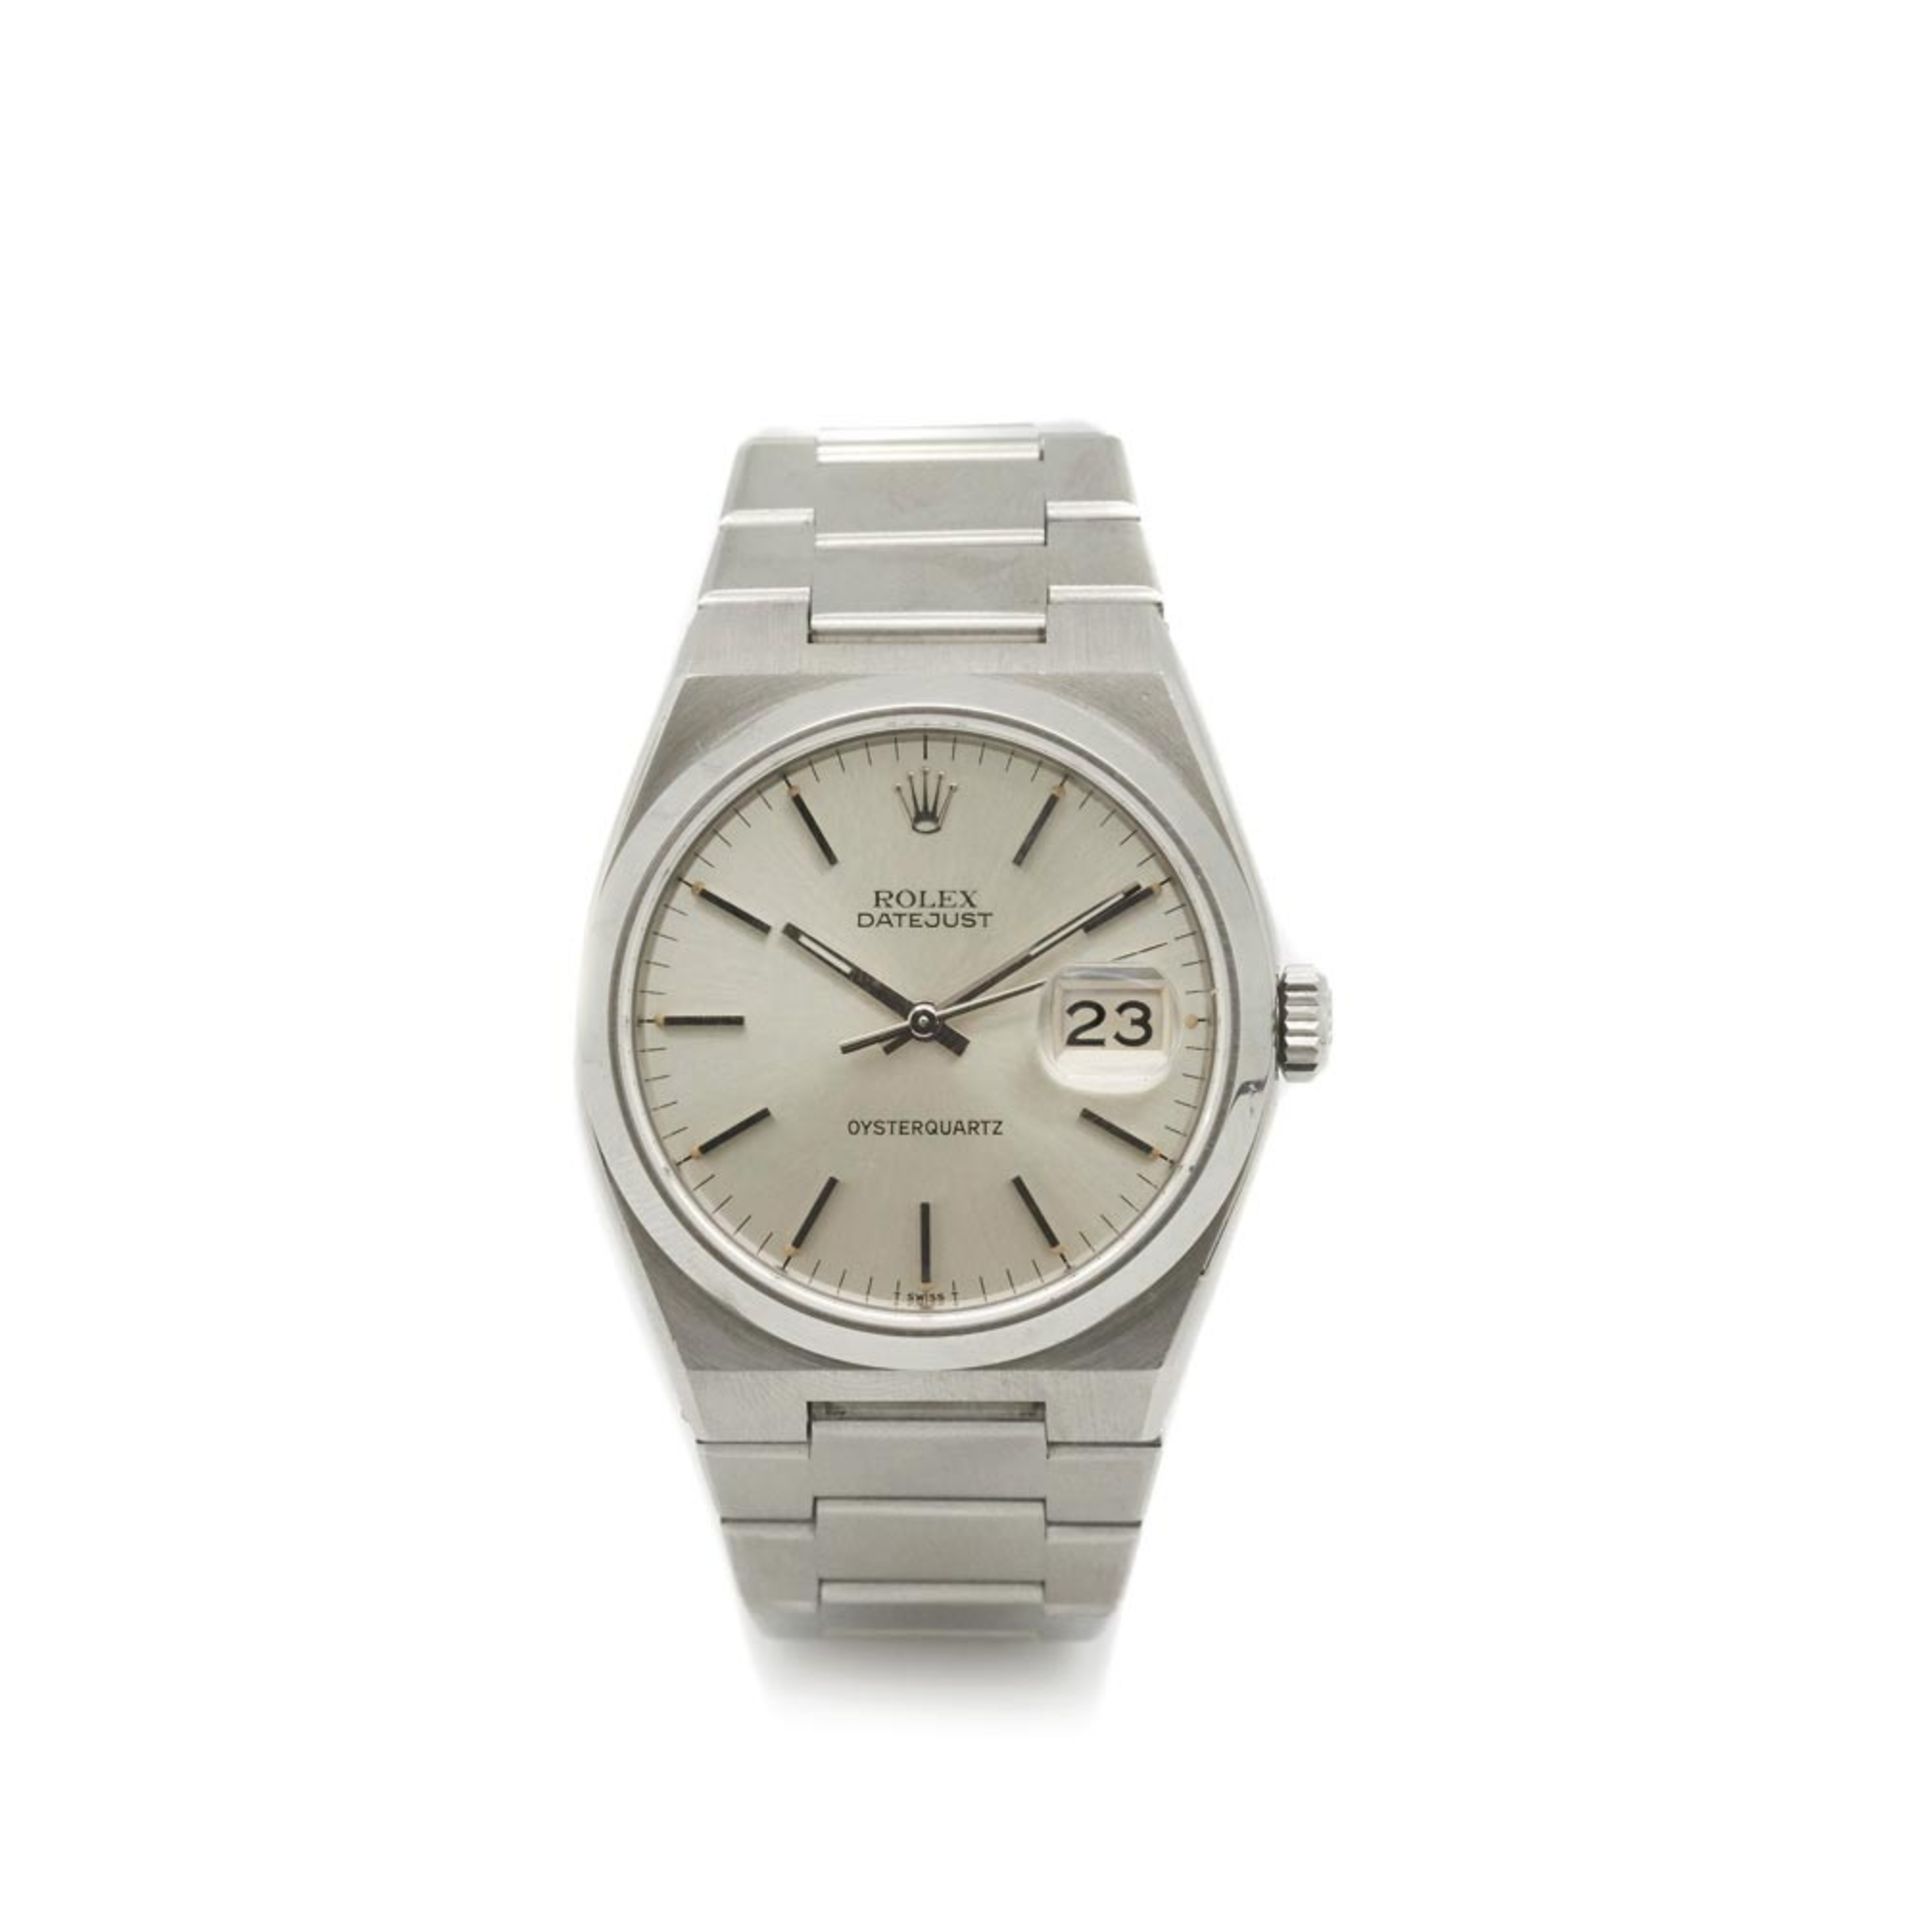 Rolex Date Just steel wristwatch